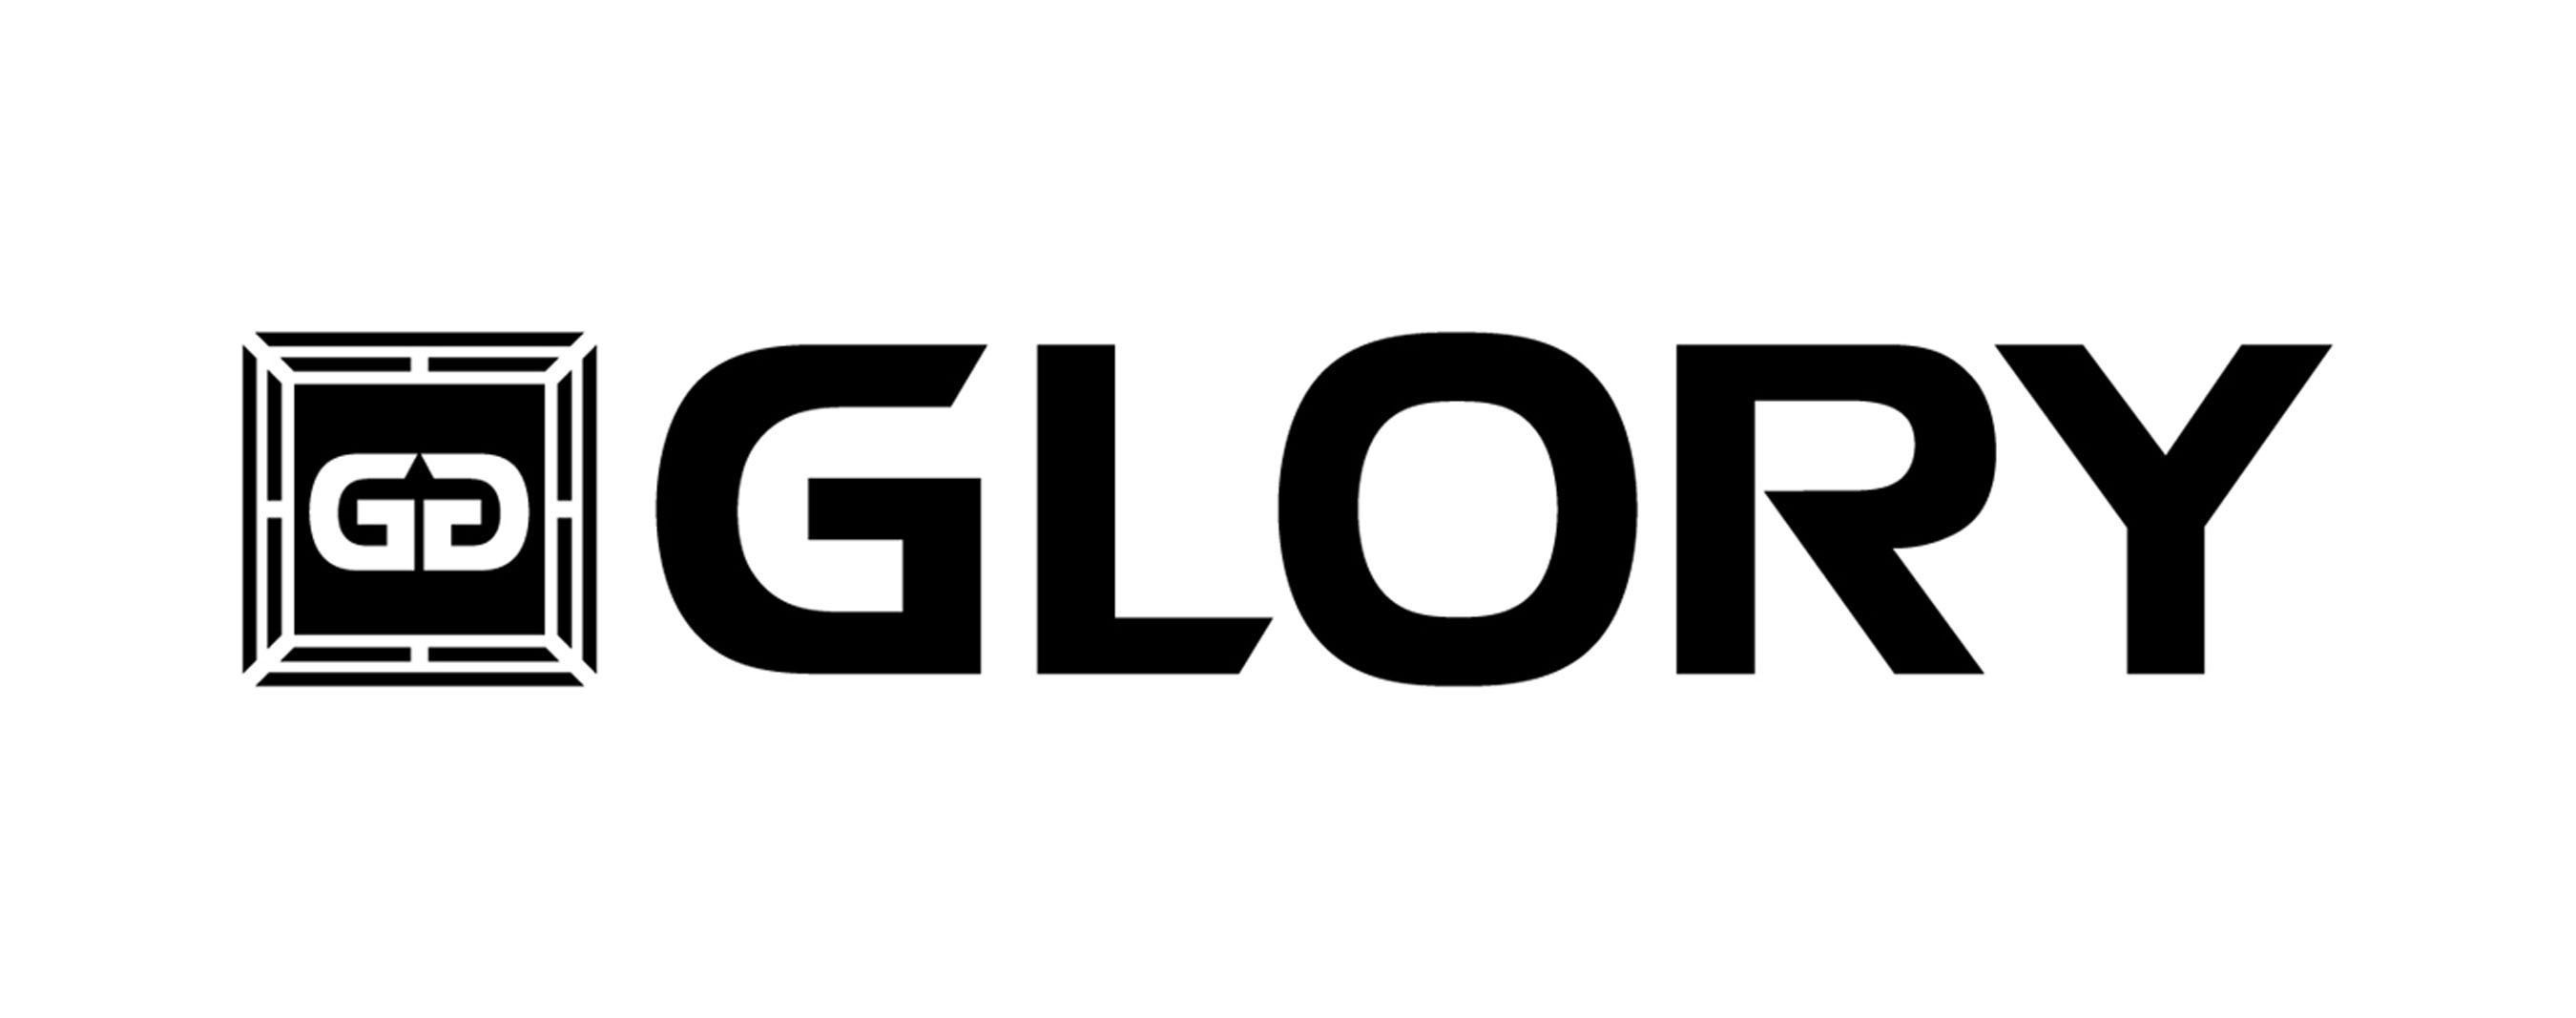 Logo for GLORY, the world's premier kickboxing league.